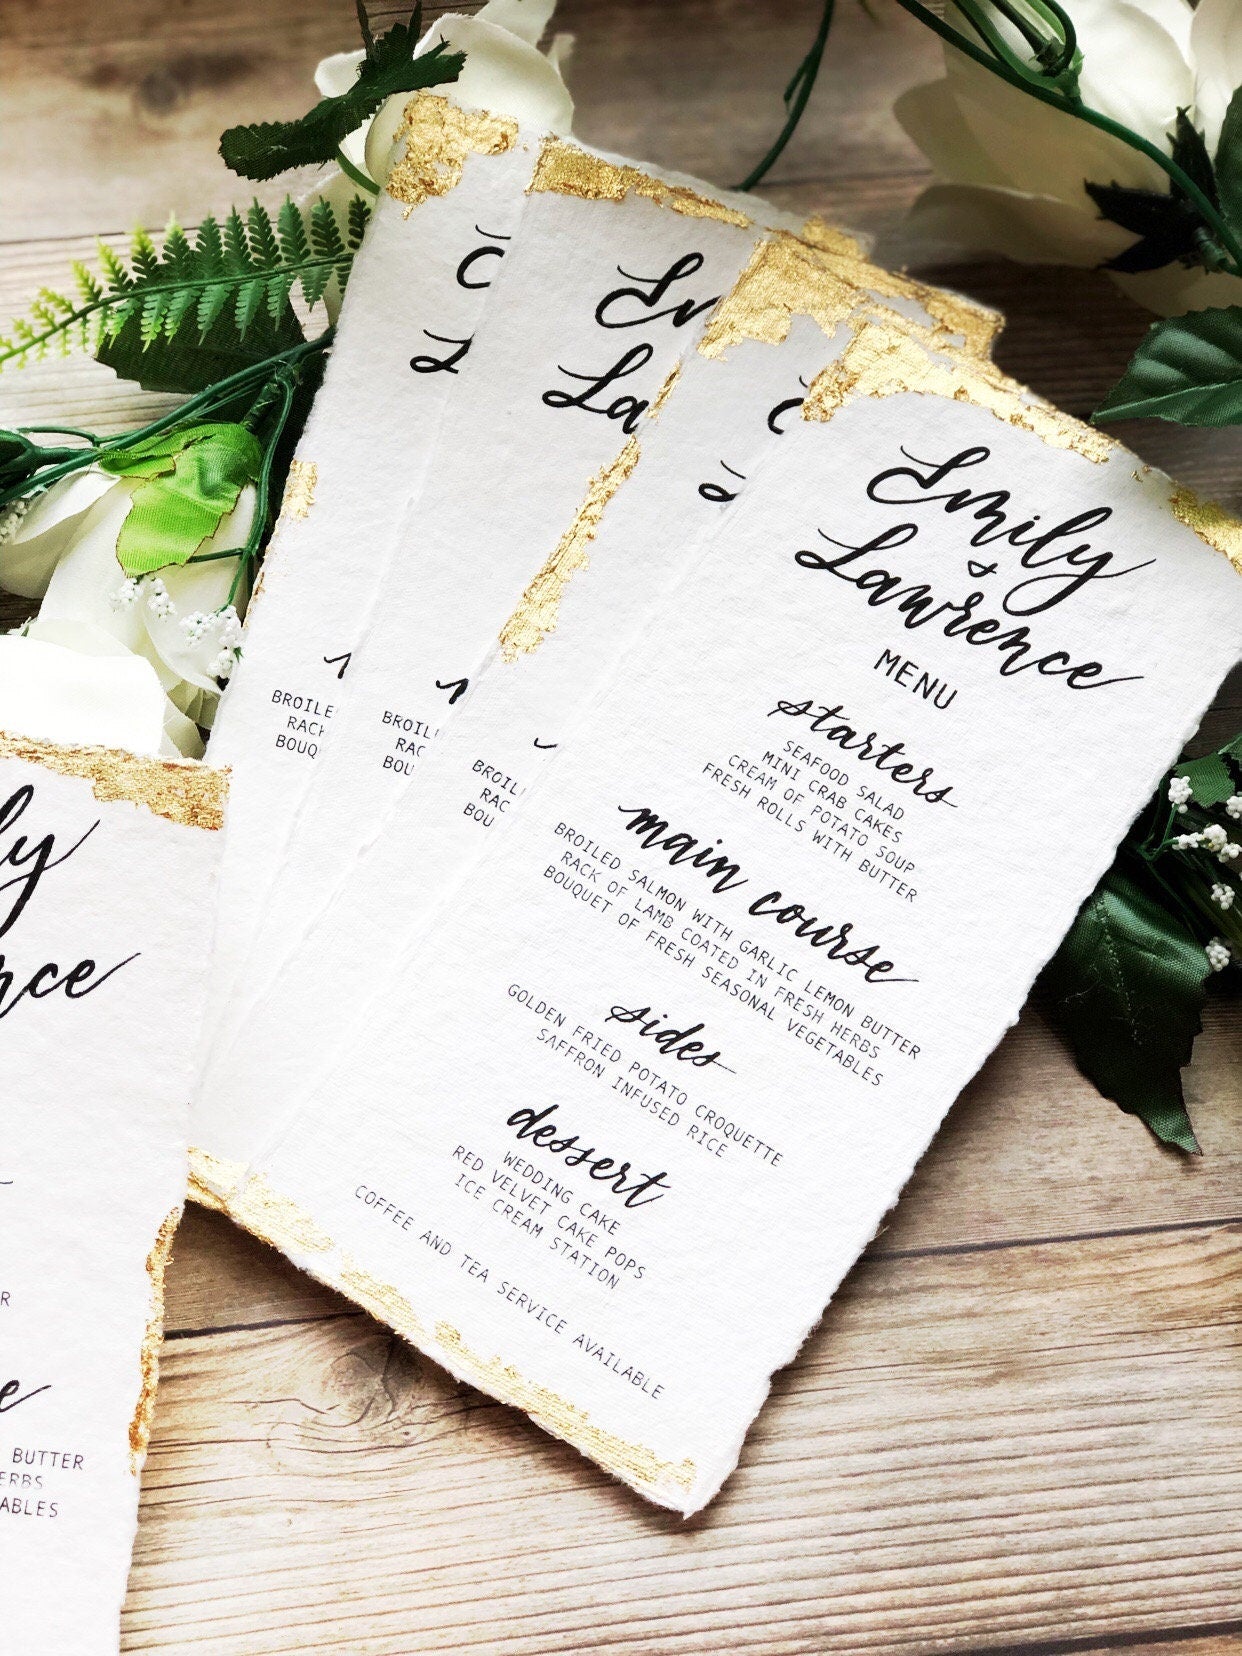 Deckled Edge Cotton Paper Wedding Menu Card | Cotton Rag Paper Gold Edge Accents